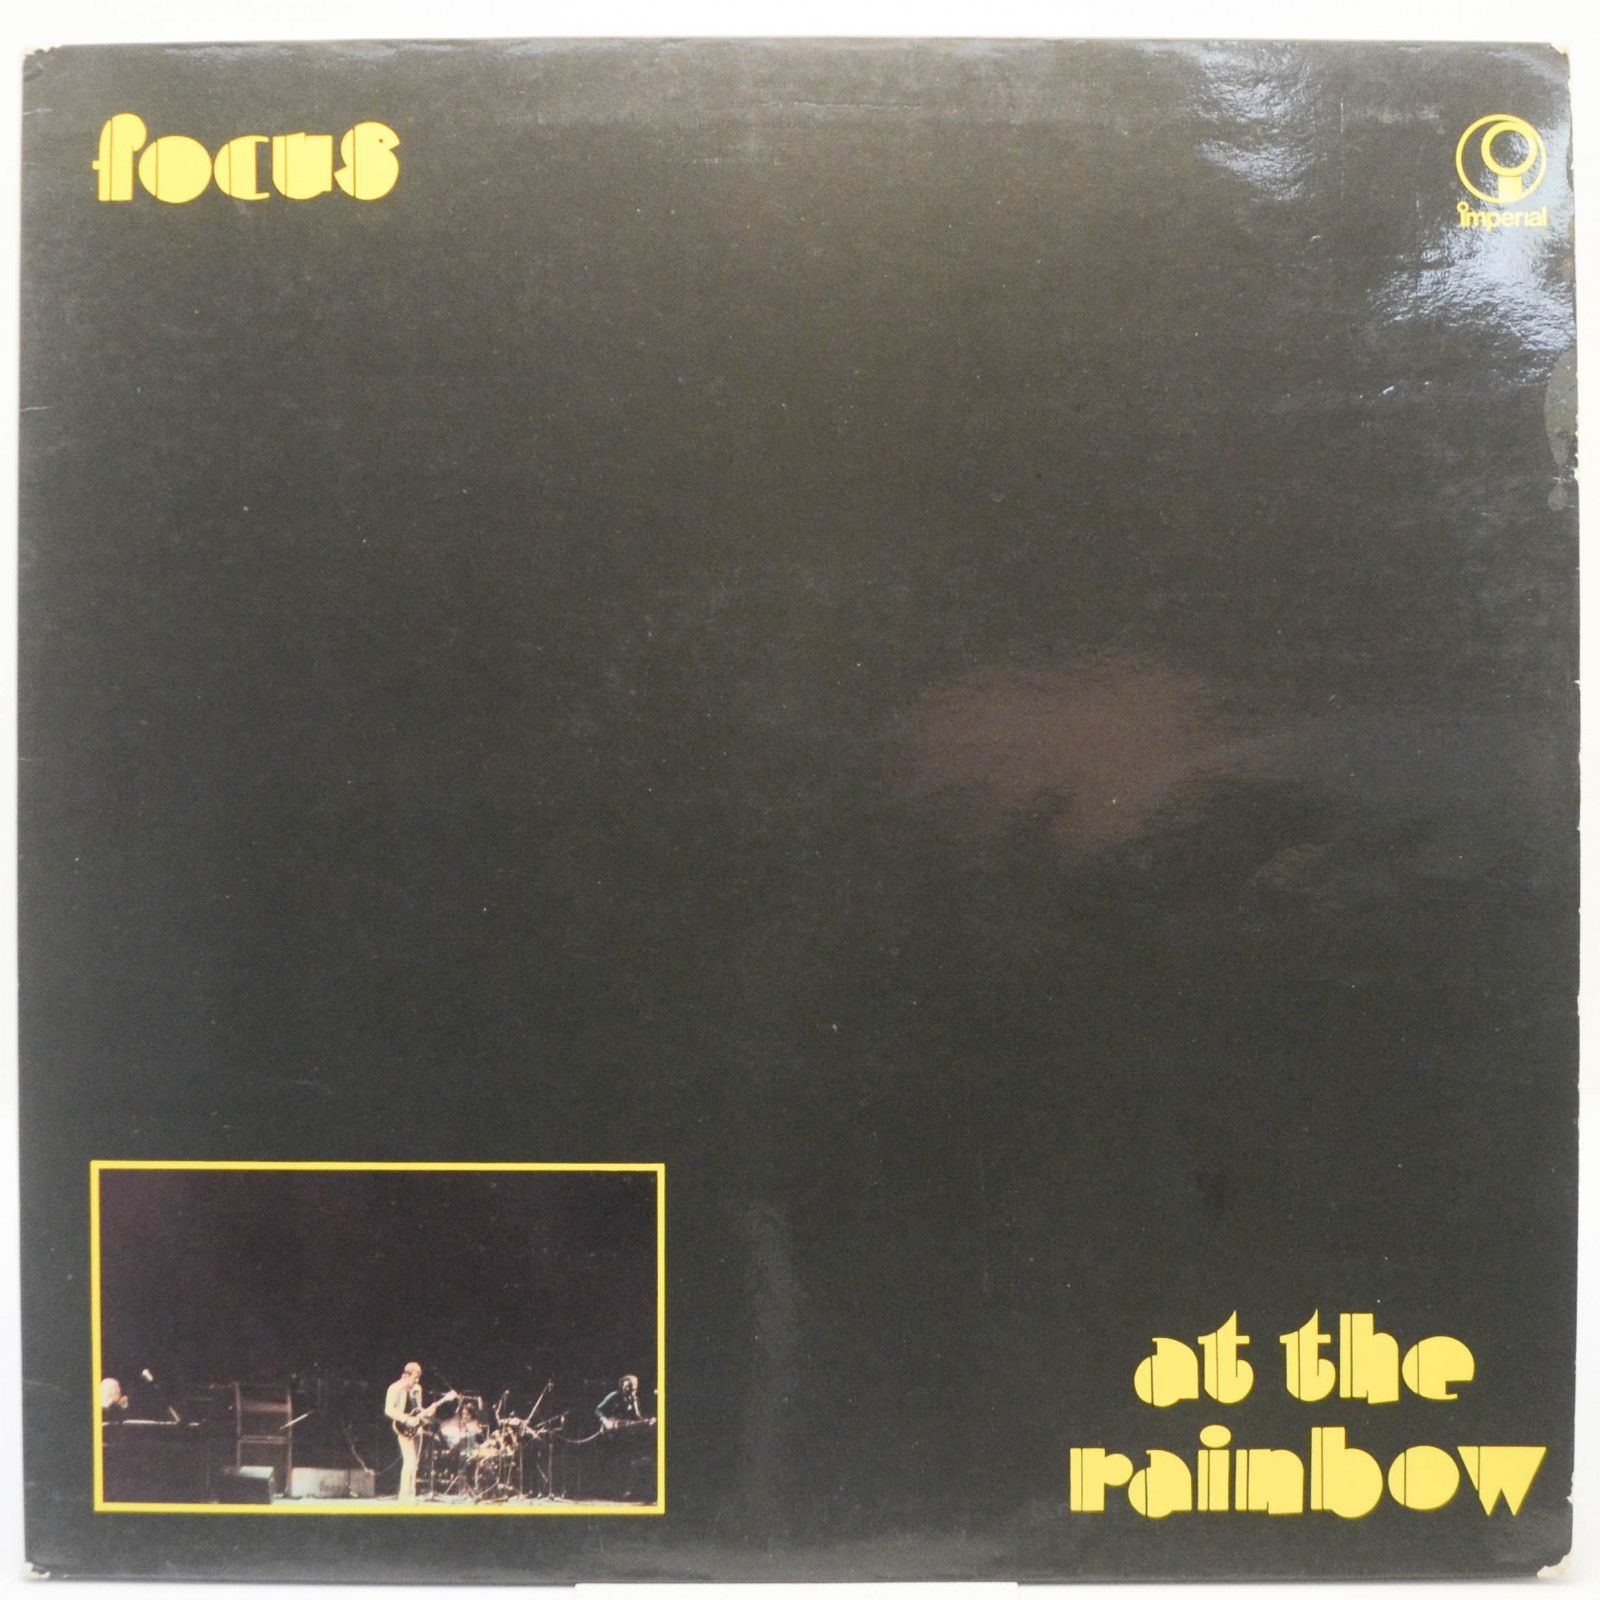 Focus — At The Rainbow (1-st, Holland), 1973